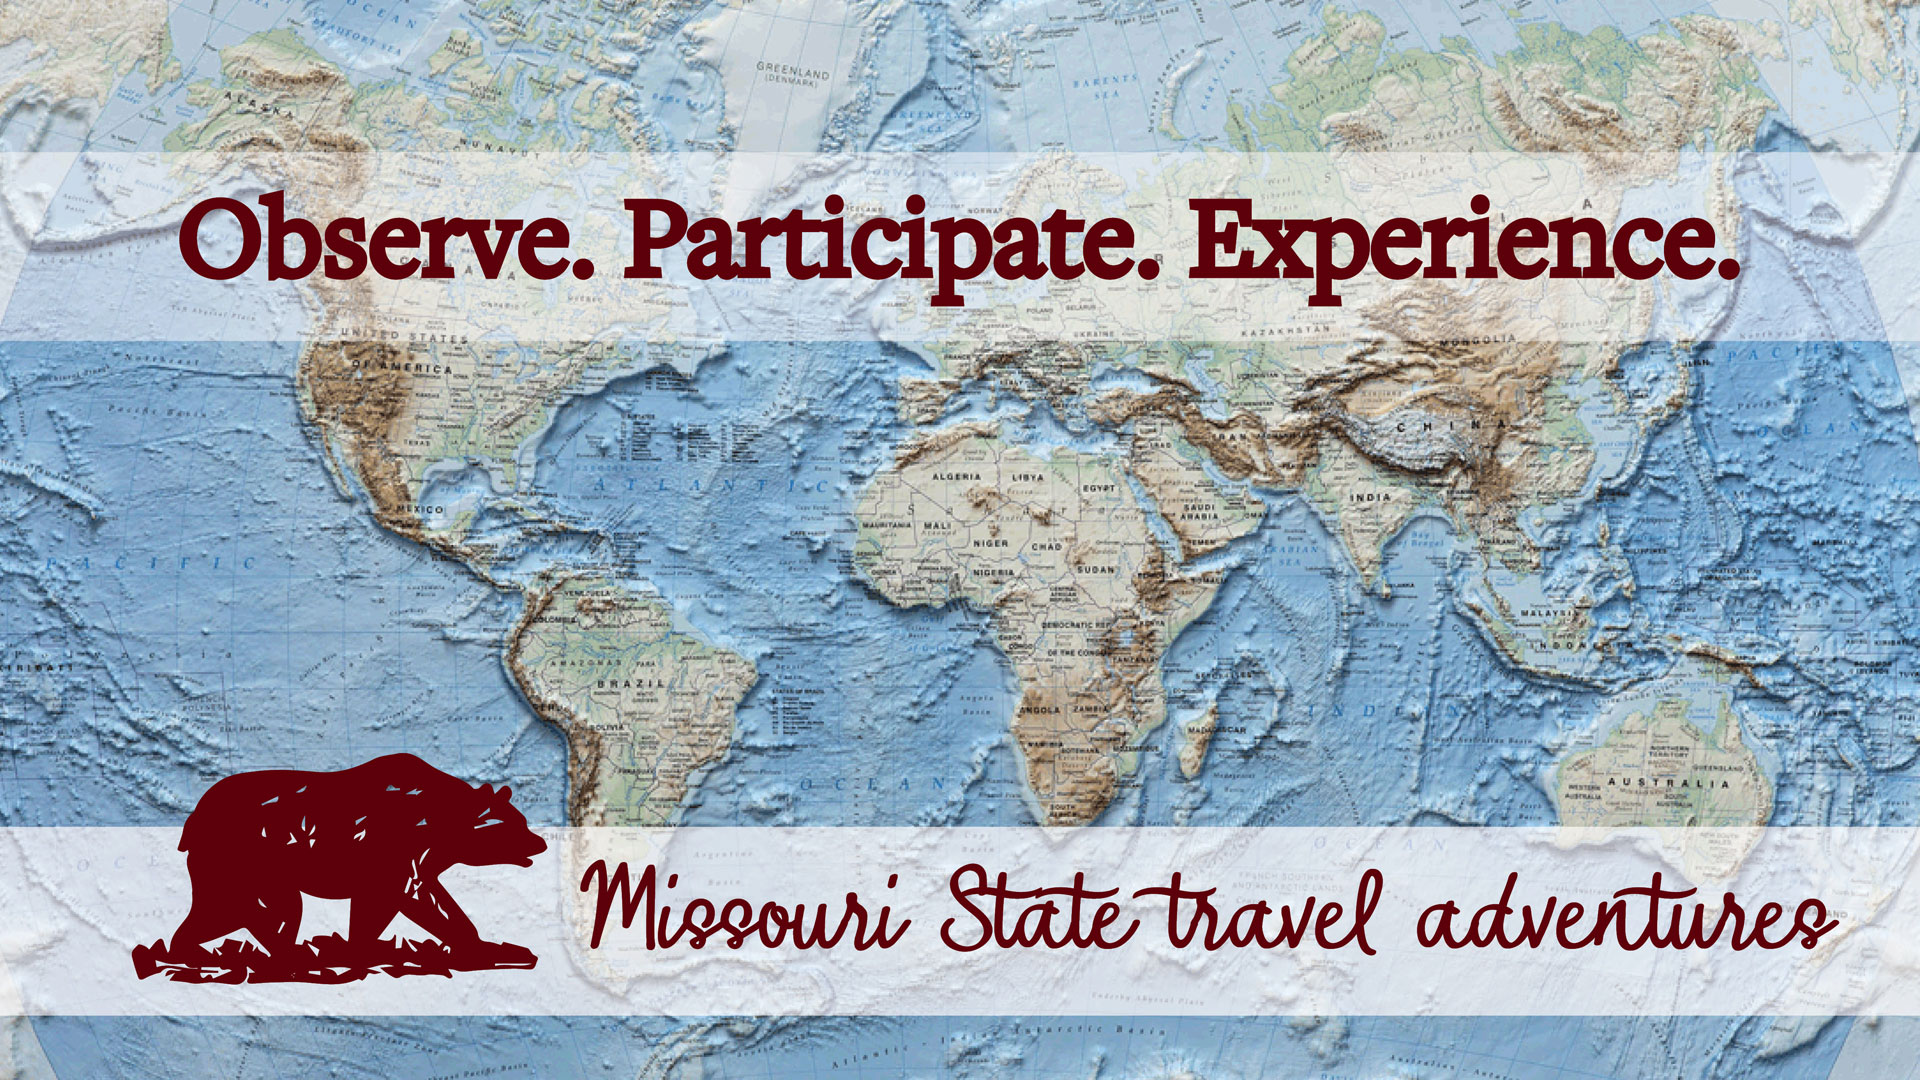 Observe. Participate. Experience. Missouri State travel adventures